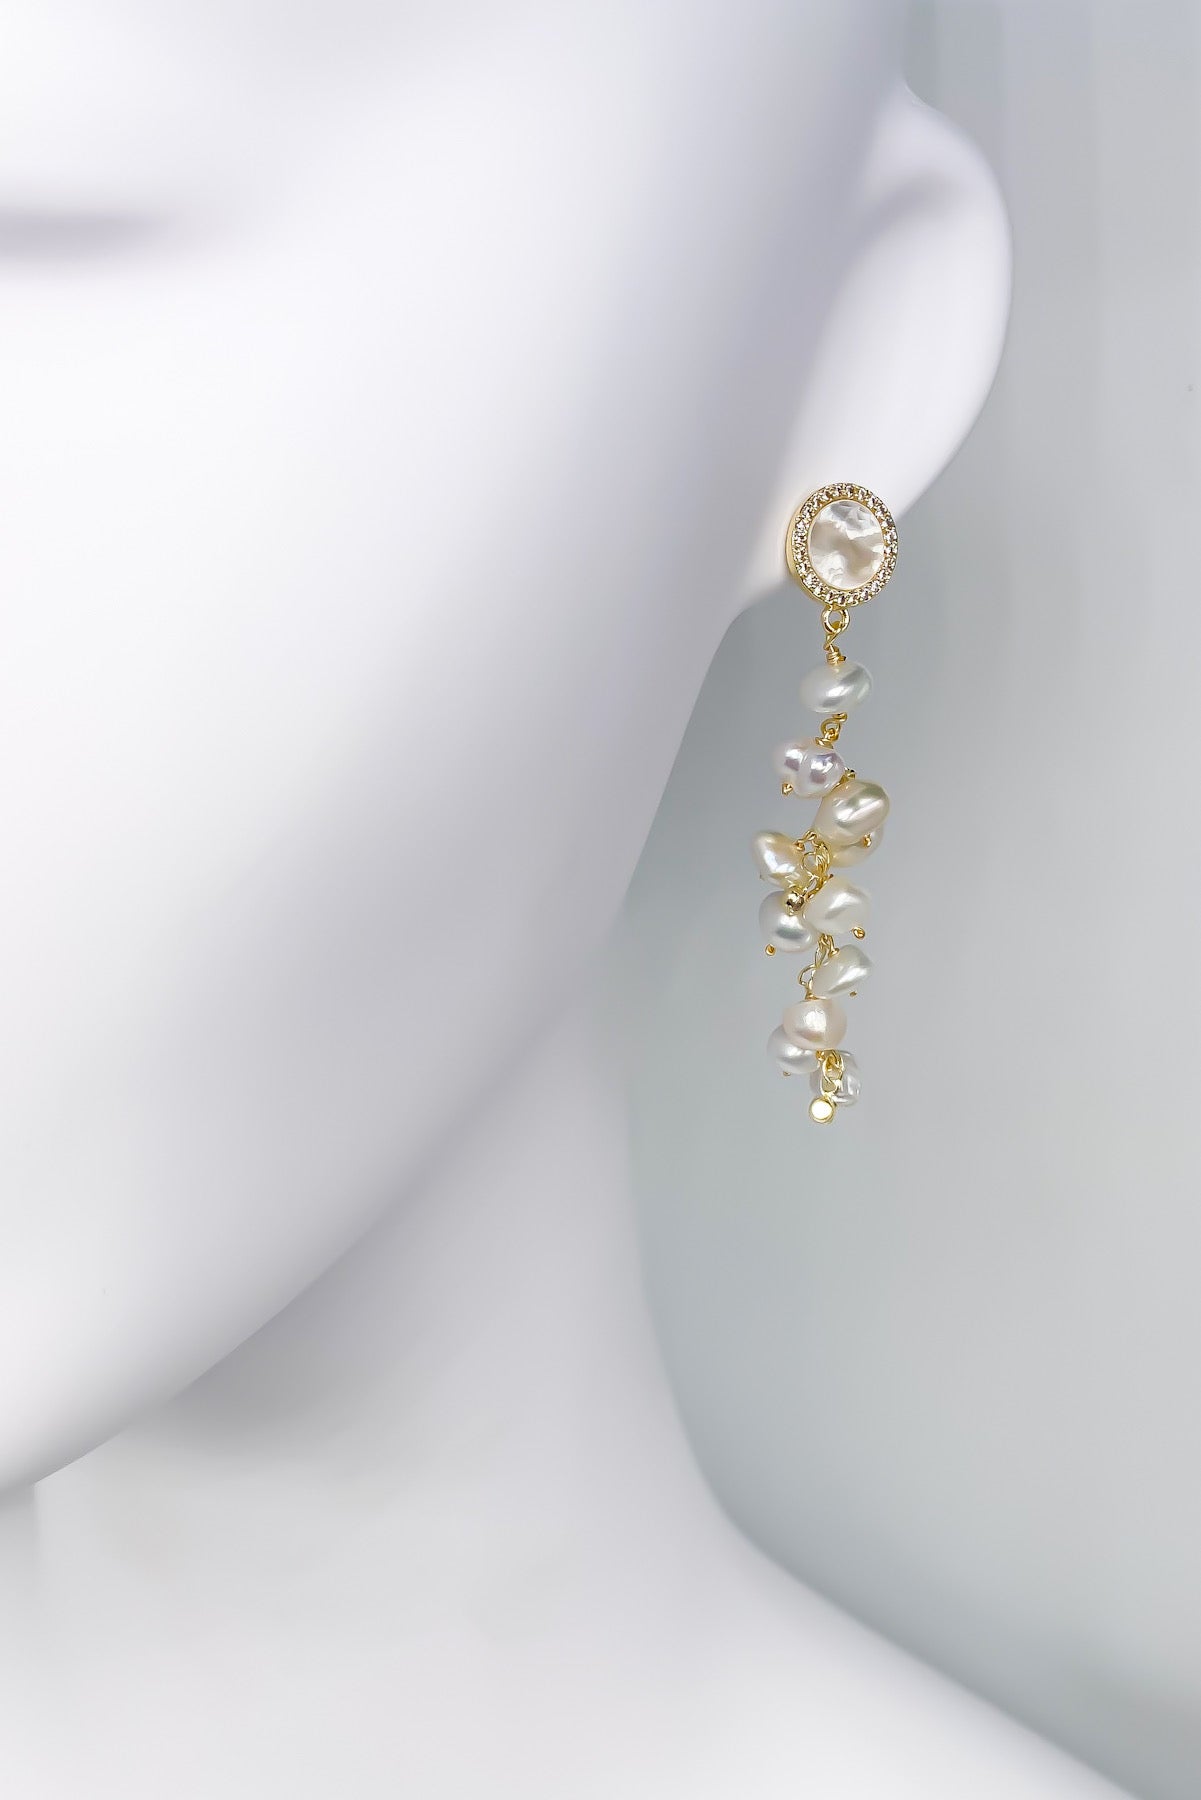 SKYE San Francisco Shop Chic Modern Elegant Classy Women Jewelry French Parisian Minimalist Renee mother of pearl drop earrings 3